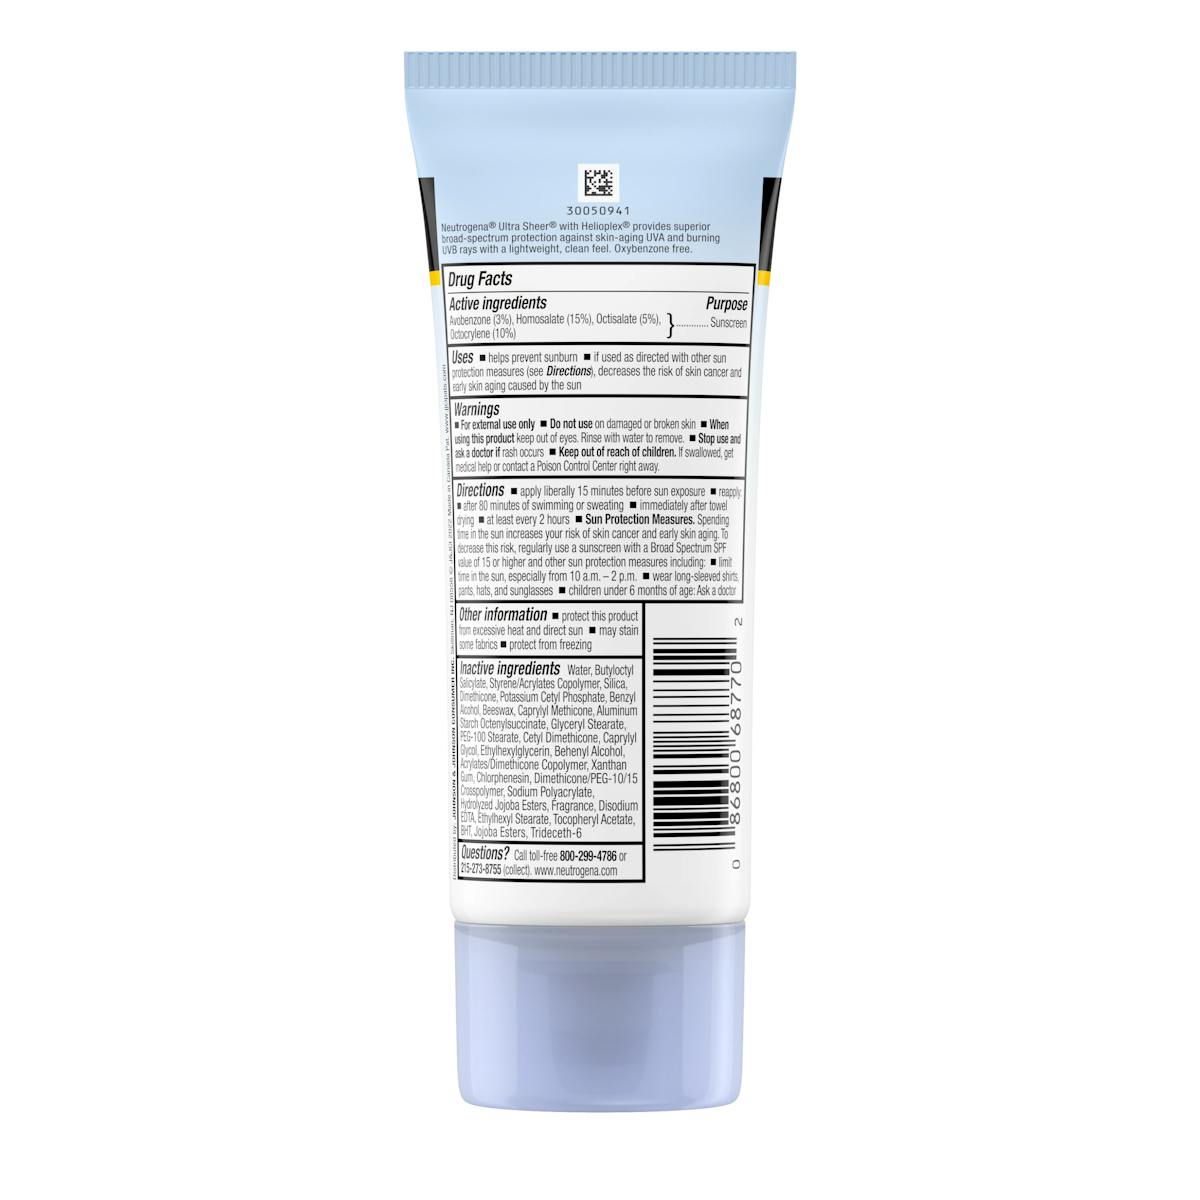 Neutrogena Ultra Sheer Lightweight Sunscreen Spray, SPF 70+ Sunblock, 5 oz  